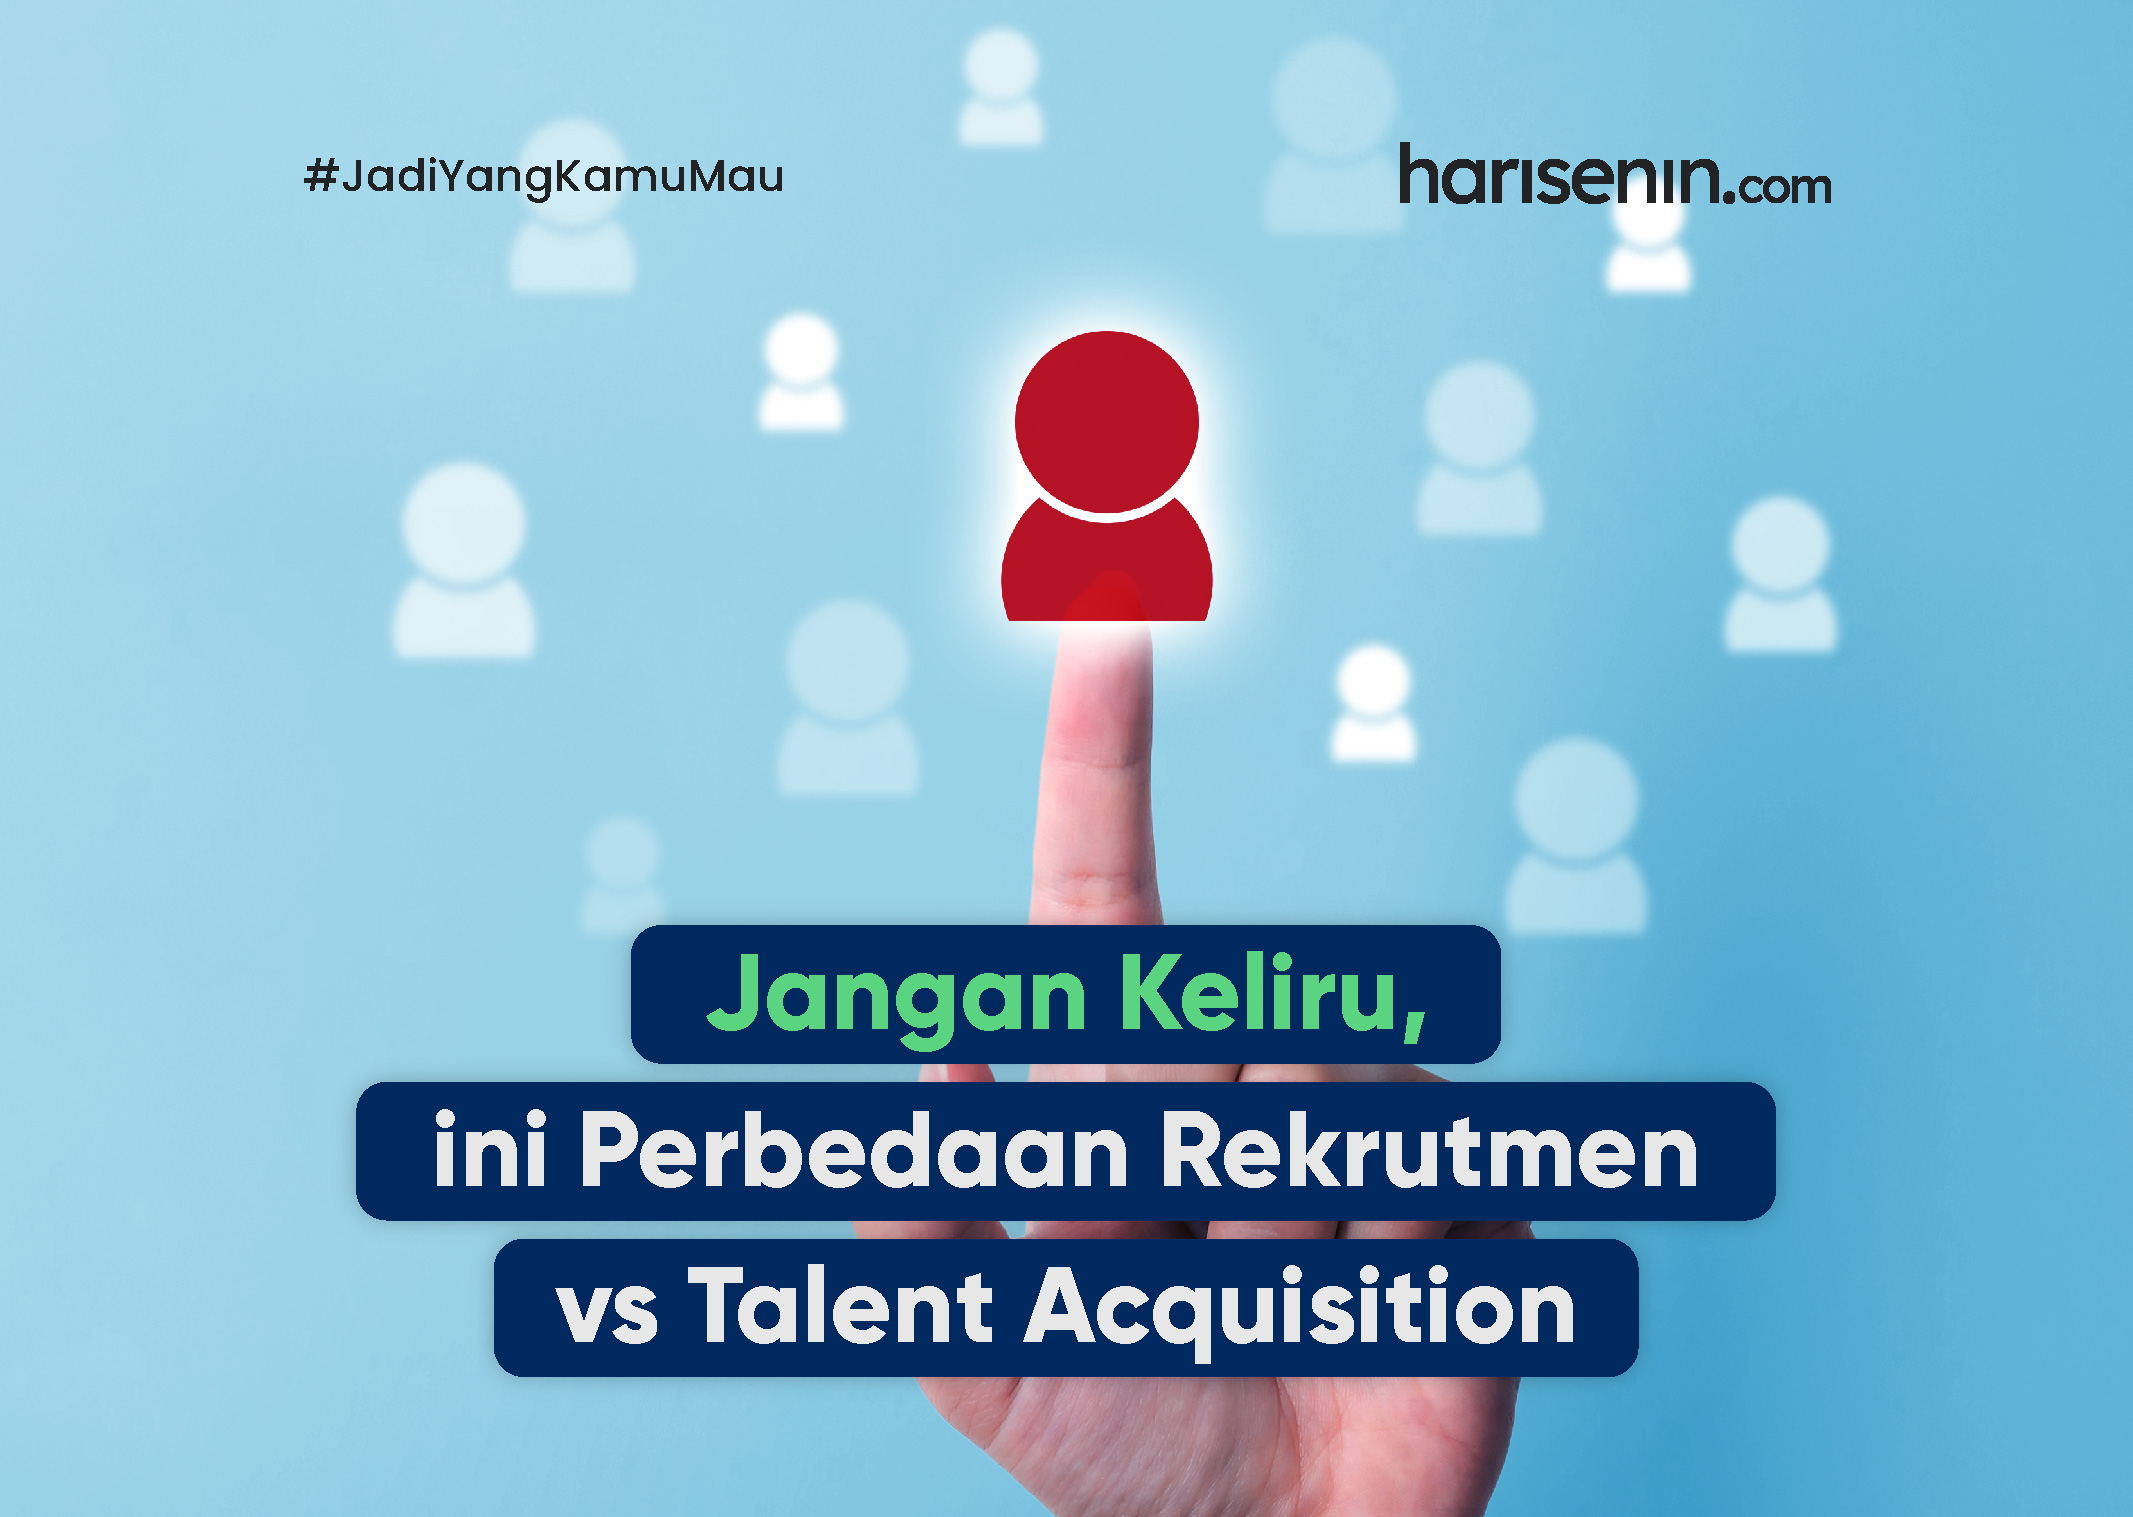 Jangan Keliru, ini Perbedaan Rekrutmen vs Talent Acquisition